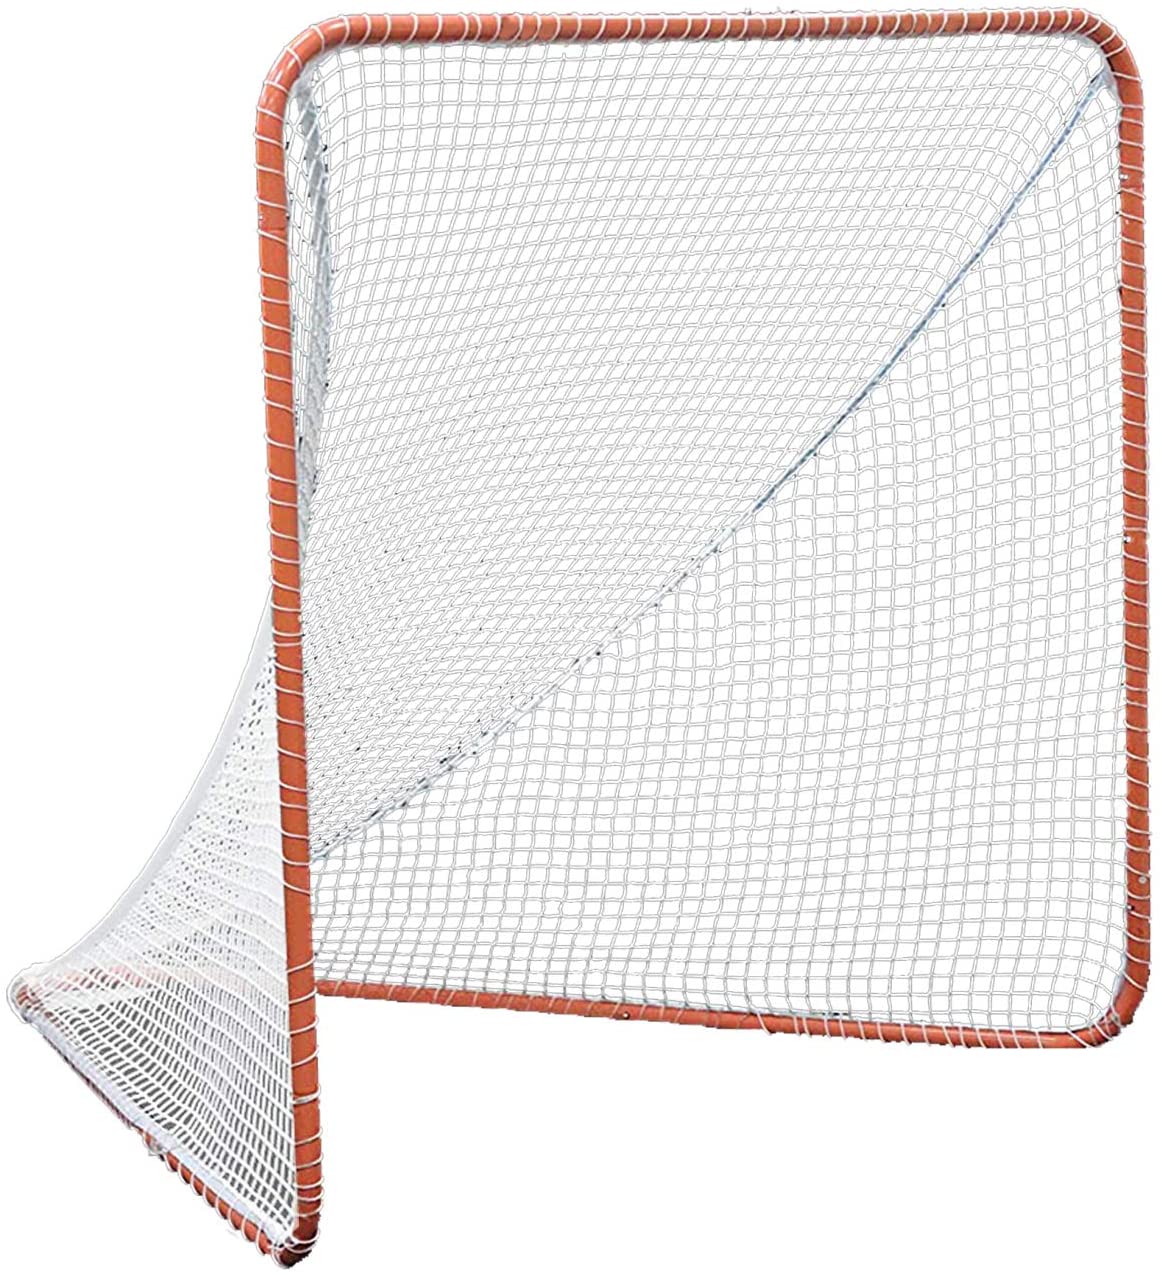 Kapler Regulation Steel Lacrosse Goal & Net, 6-Foot